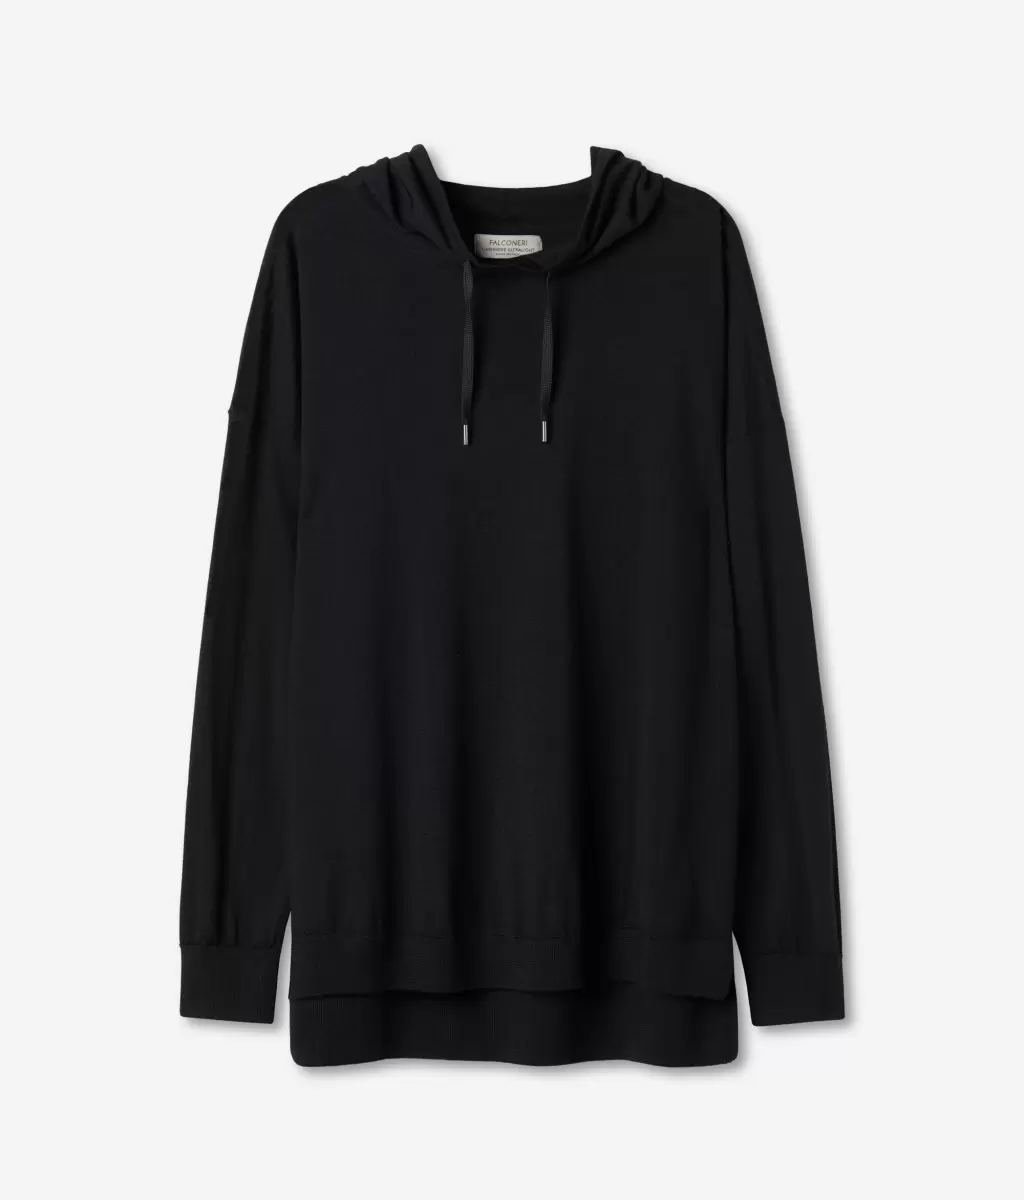 Camisolas Felpa Senhora Black Sweatshirt Em Ultrafine Cashmere Falconeri - 4